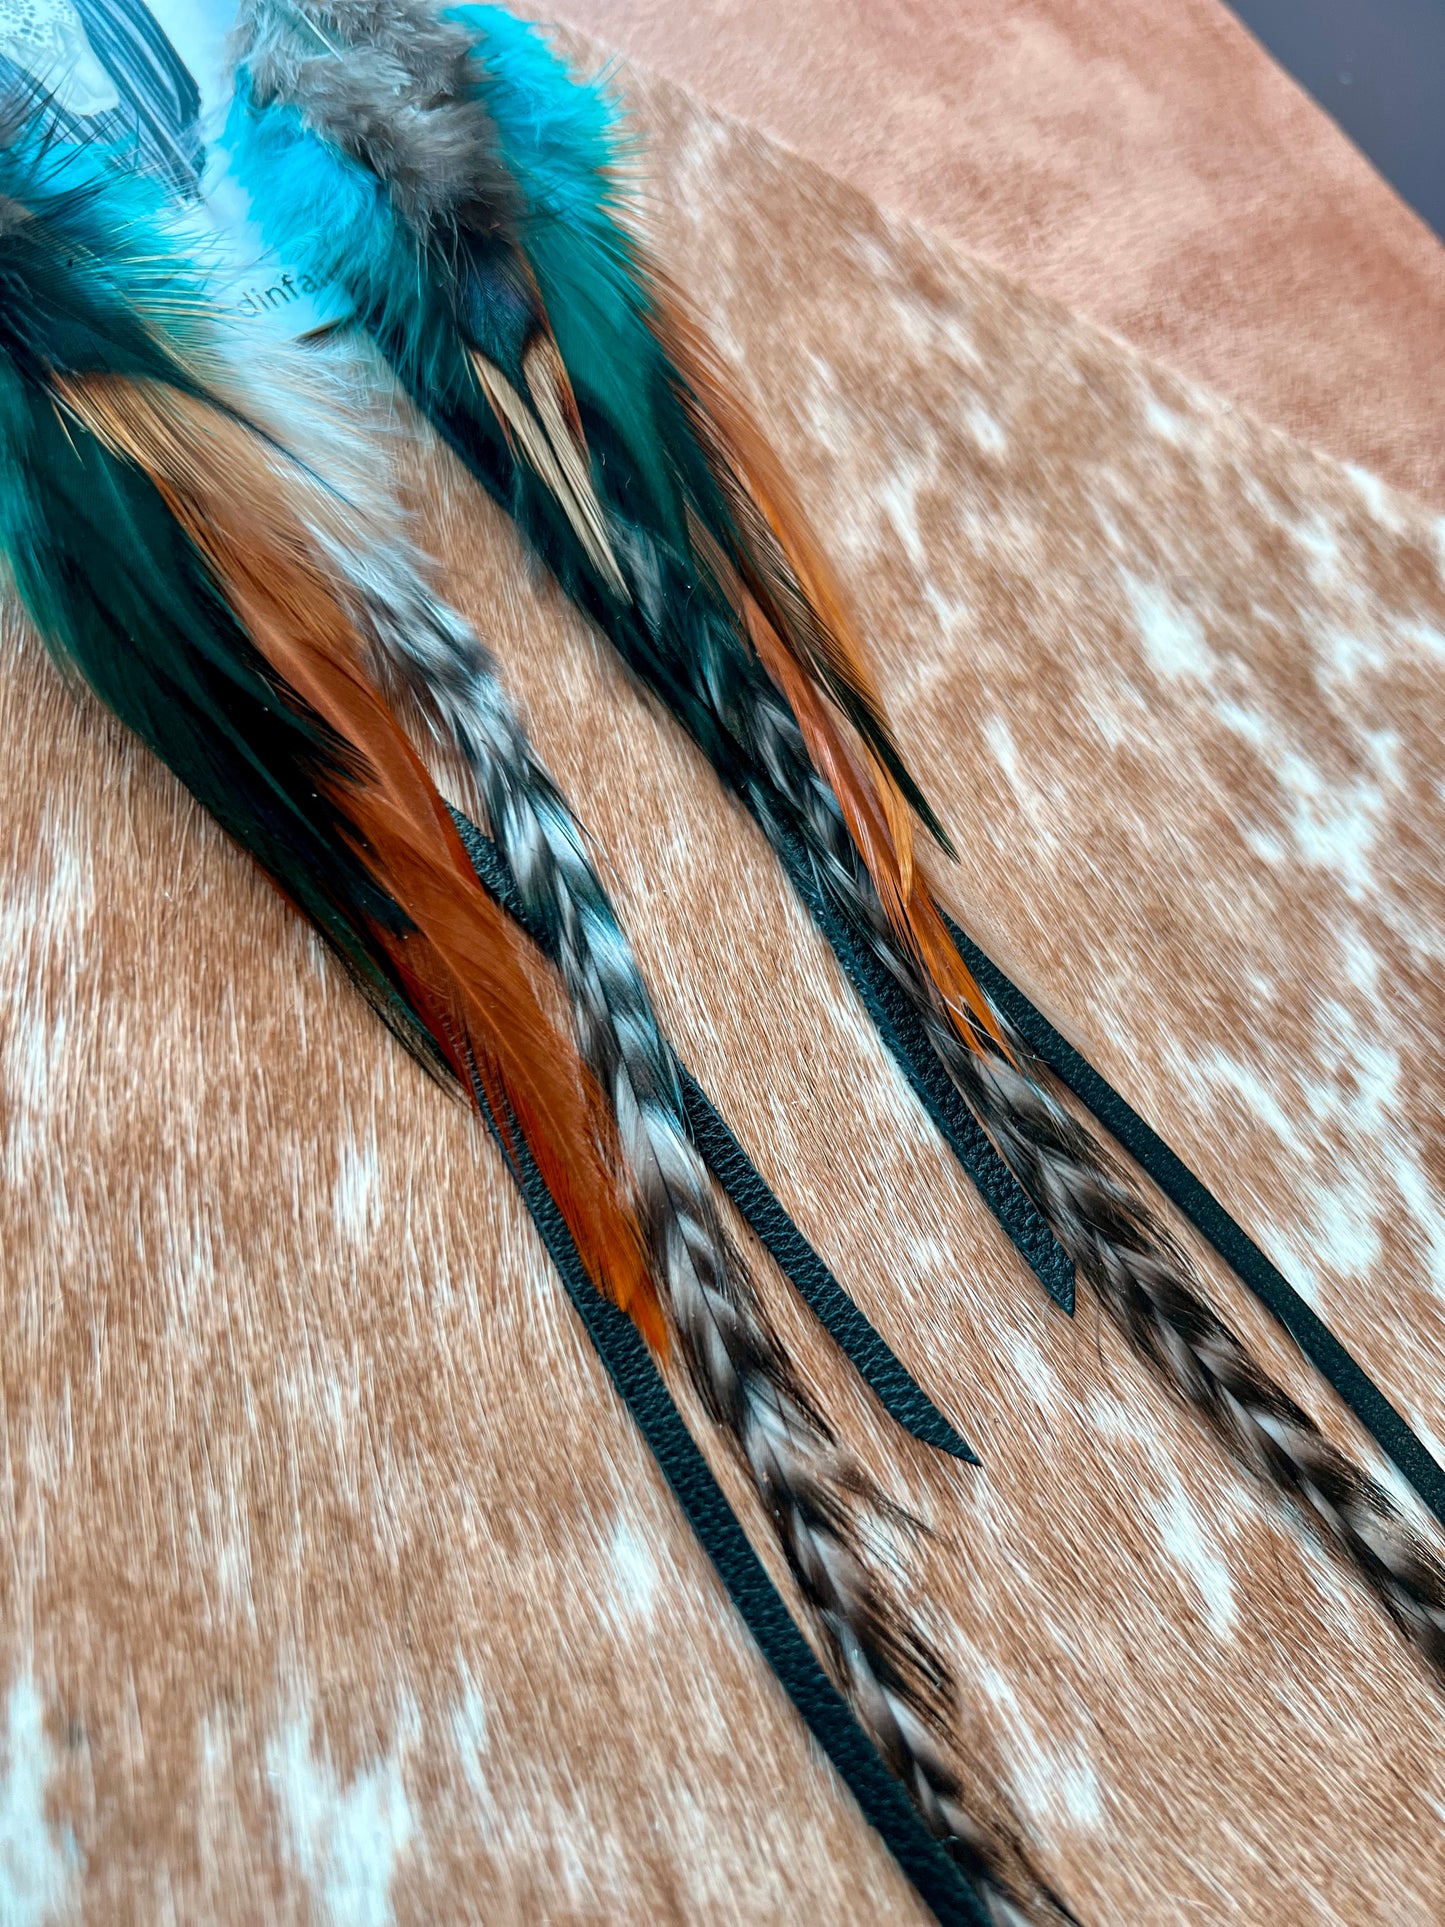 Willow Creek Feather Earrings